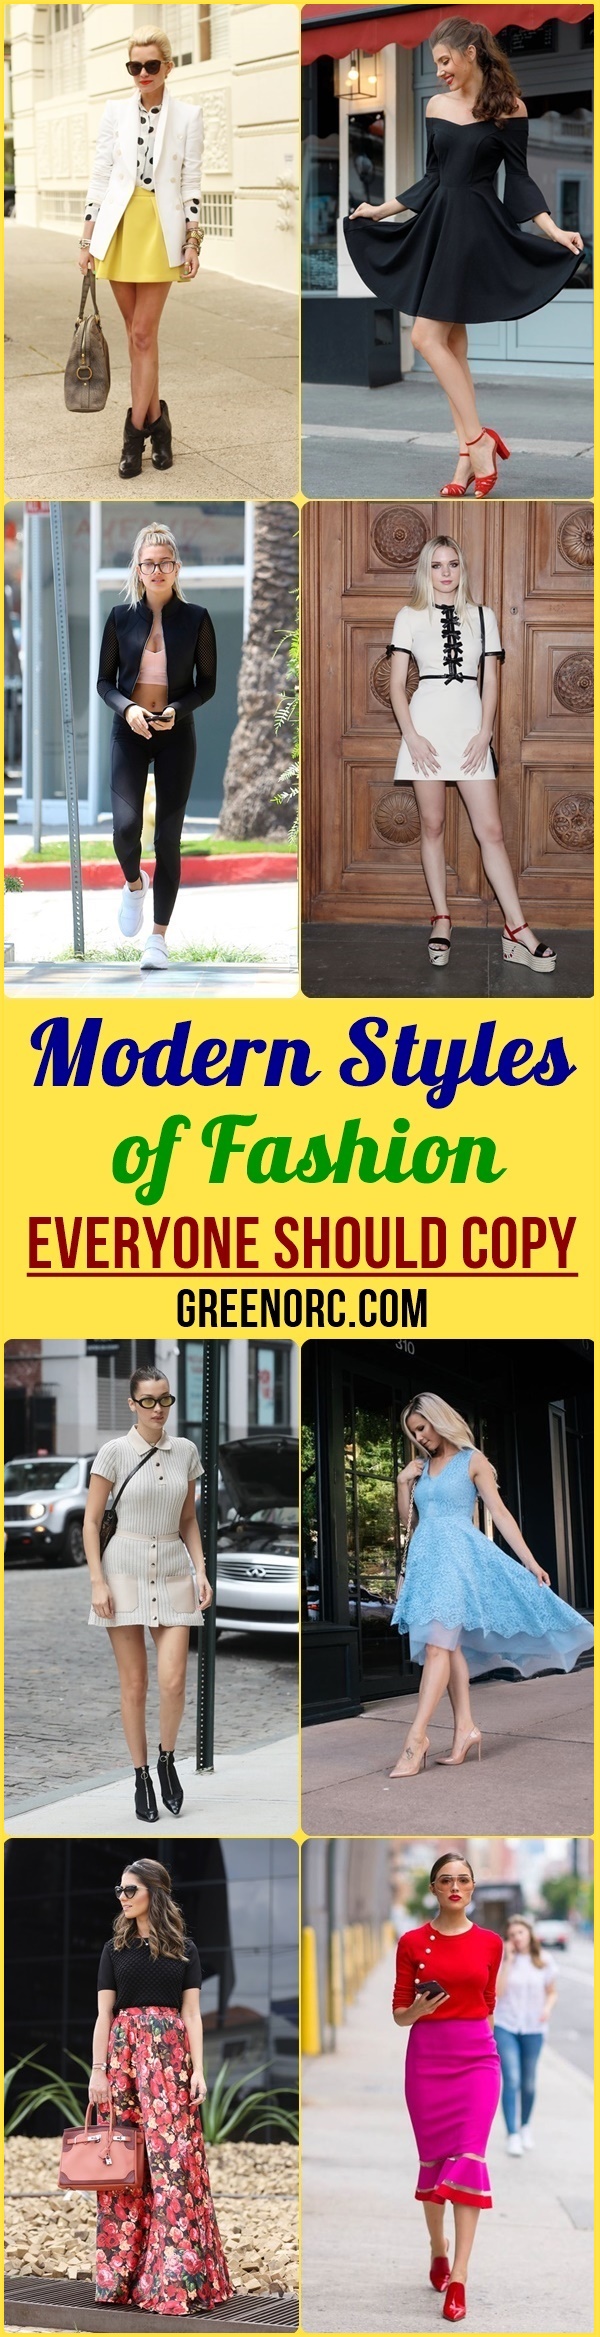 Modern Styles of Fashion Everyone Should Copy